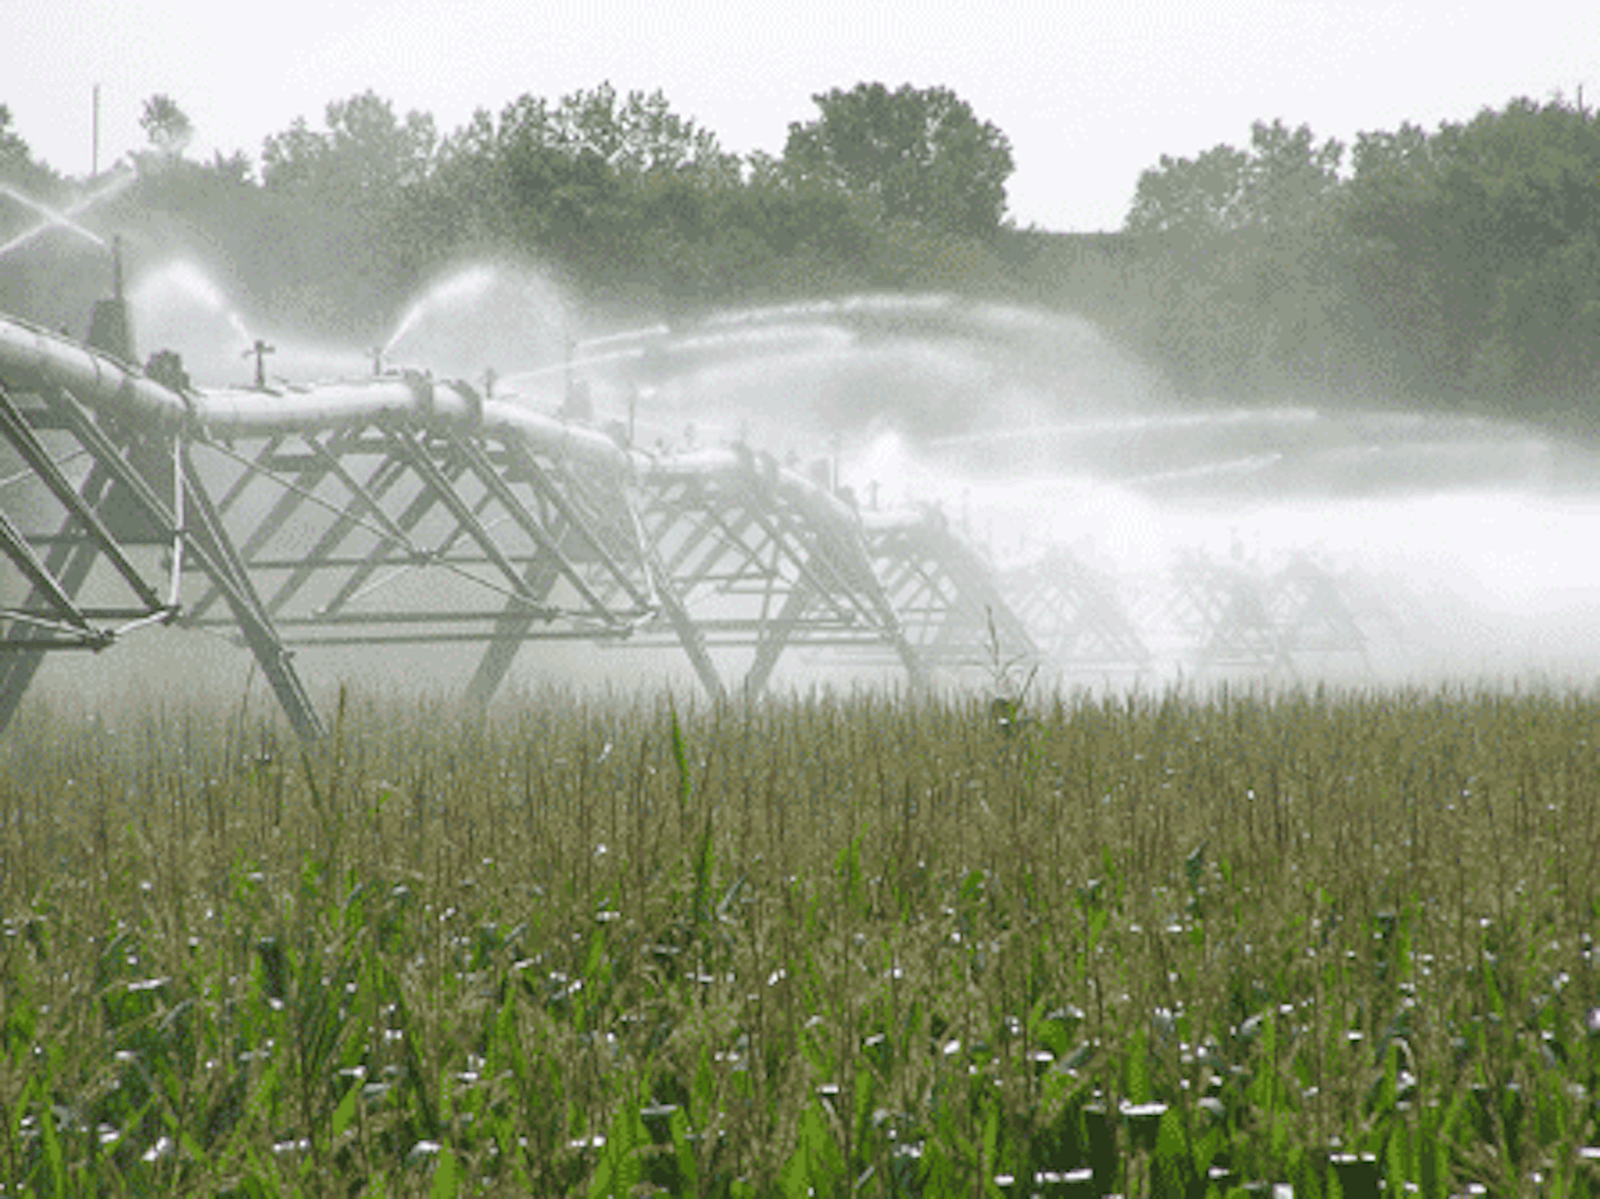 Center pivot irrigation over farmland